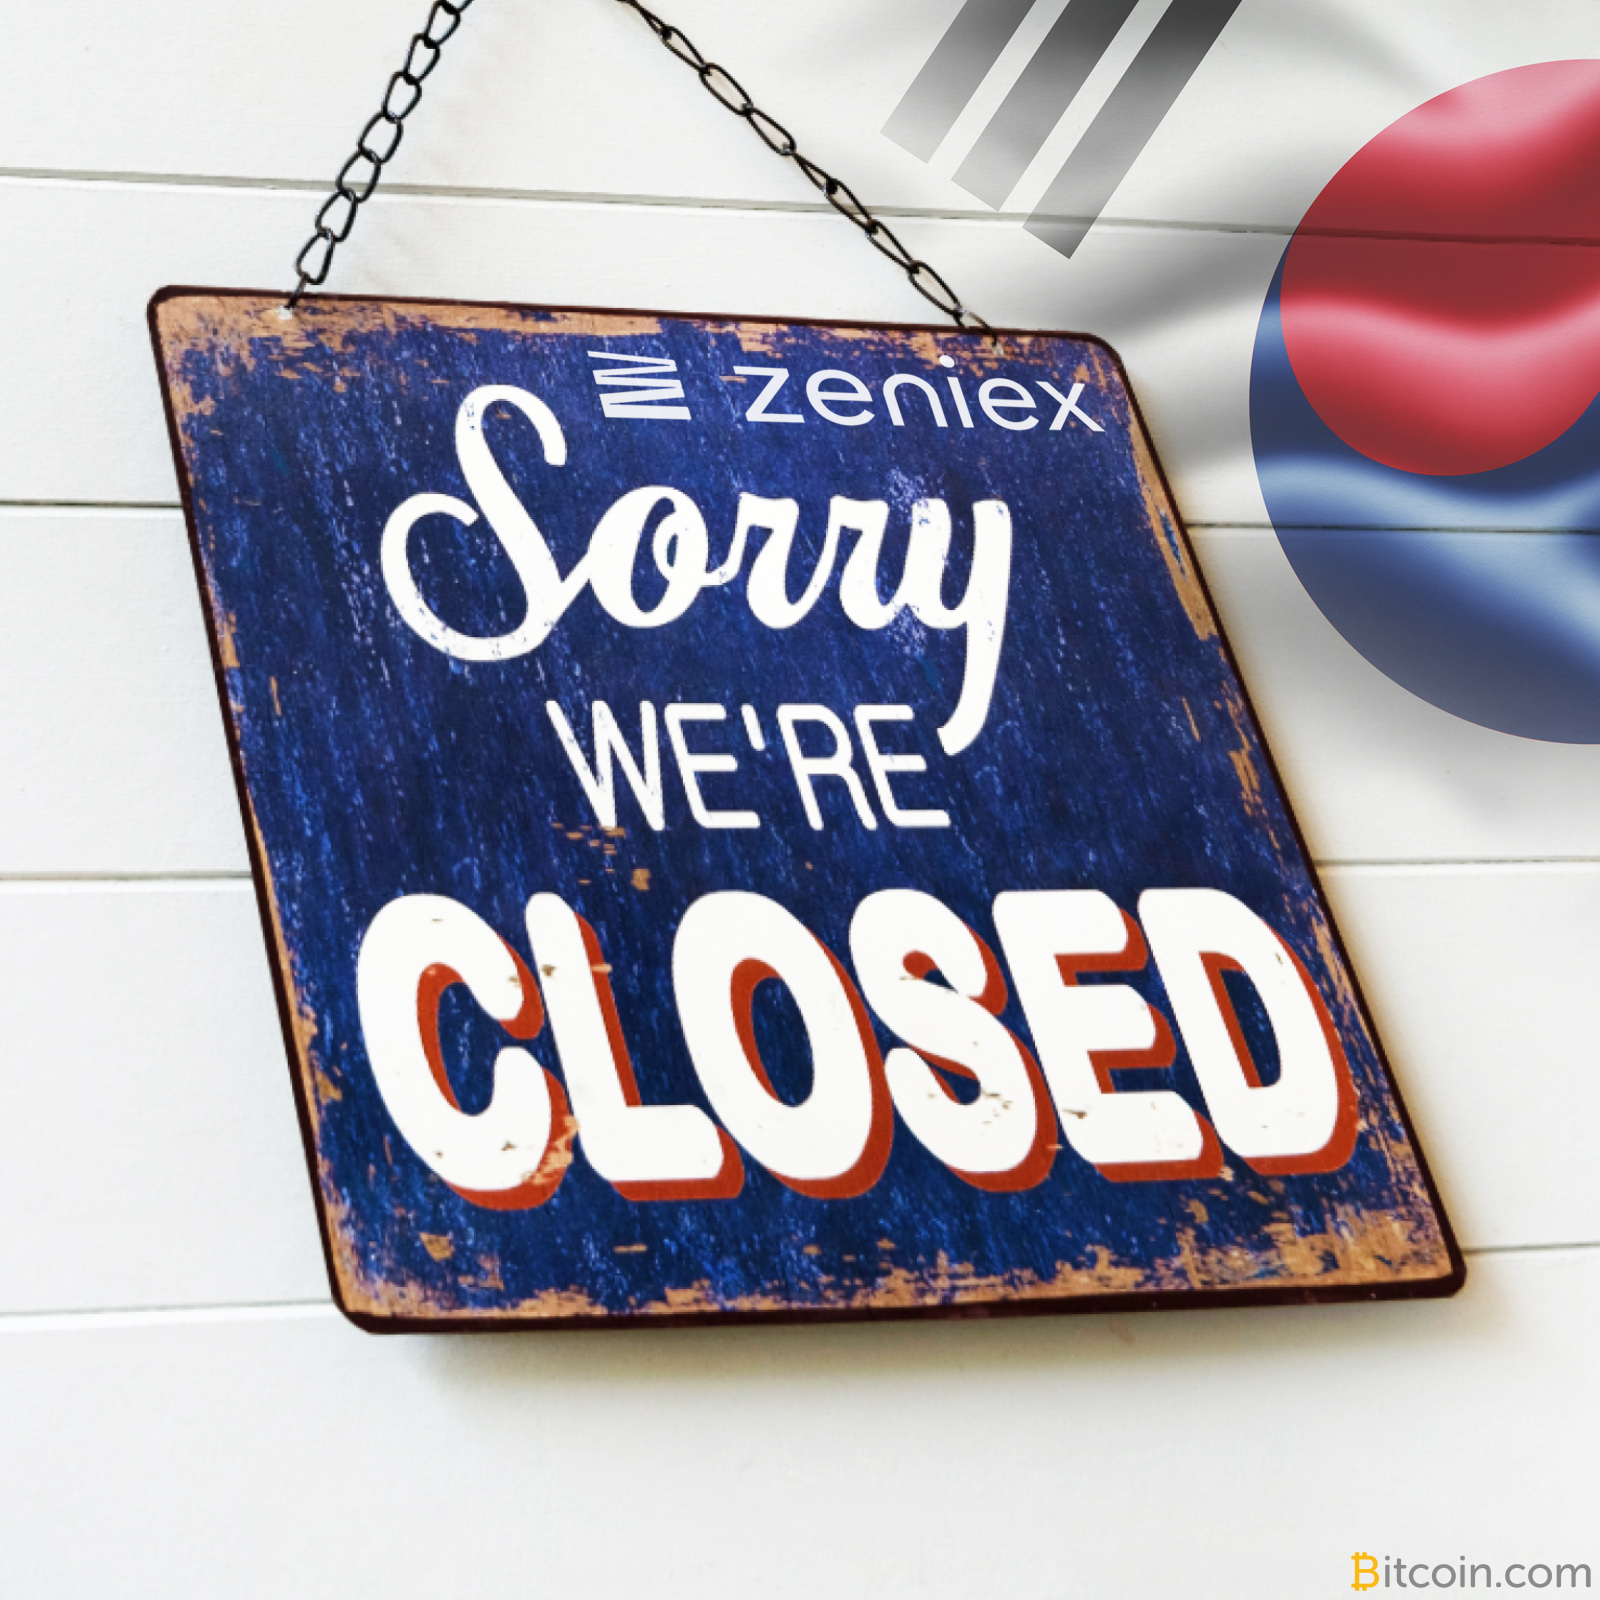 Korean Exchange Terminating After Regulator Crackdown